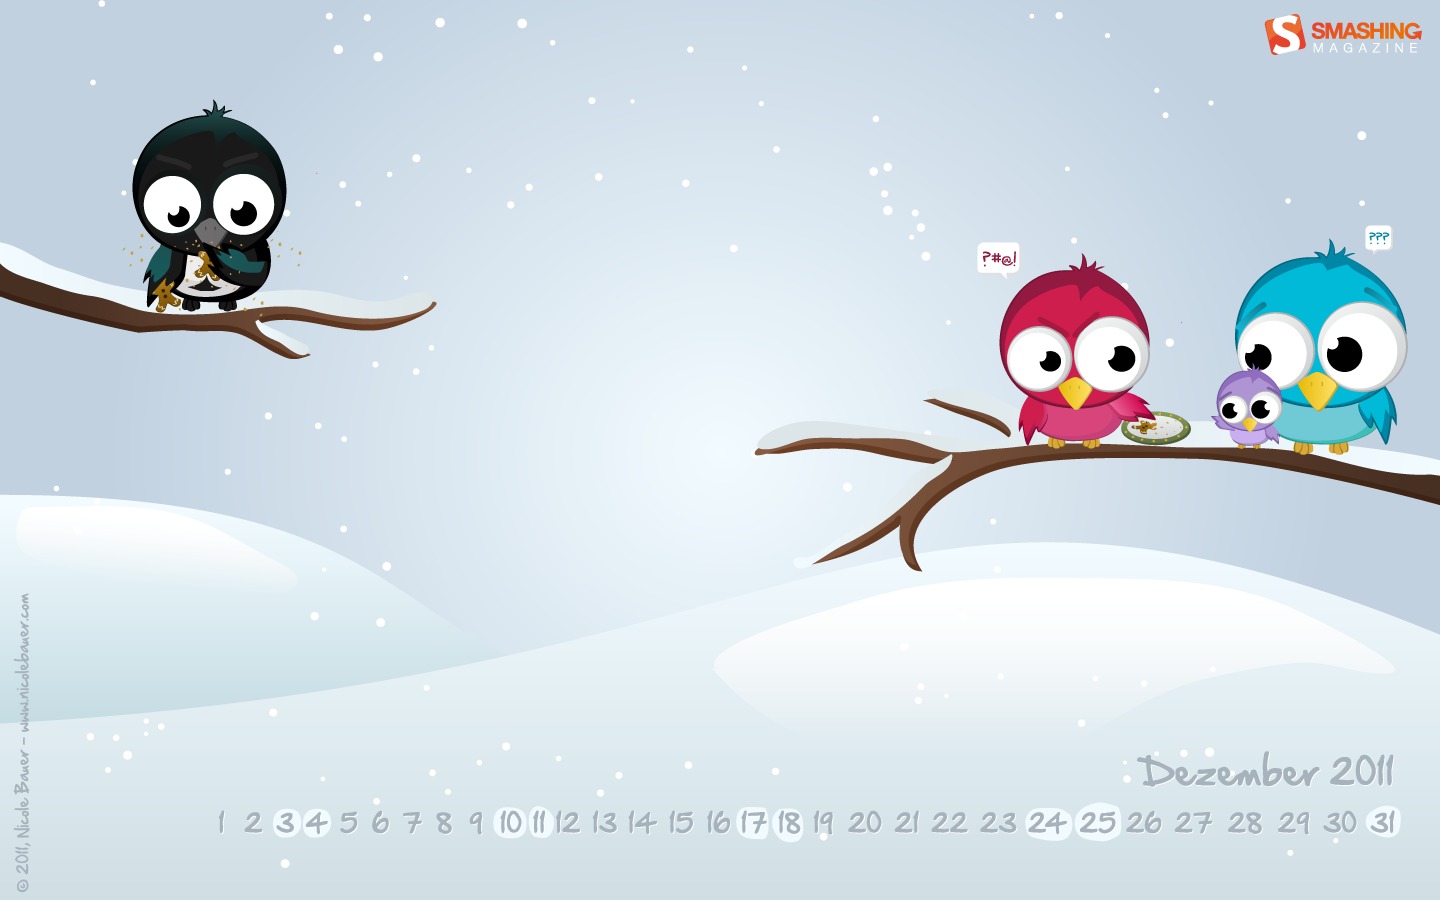 In January Calendar Wallpaper - Cute Couple Birds Cartoon - HD Wallpaper 